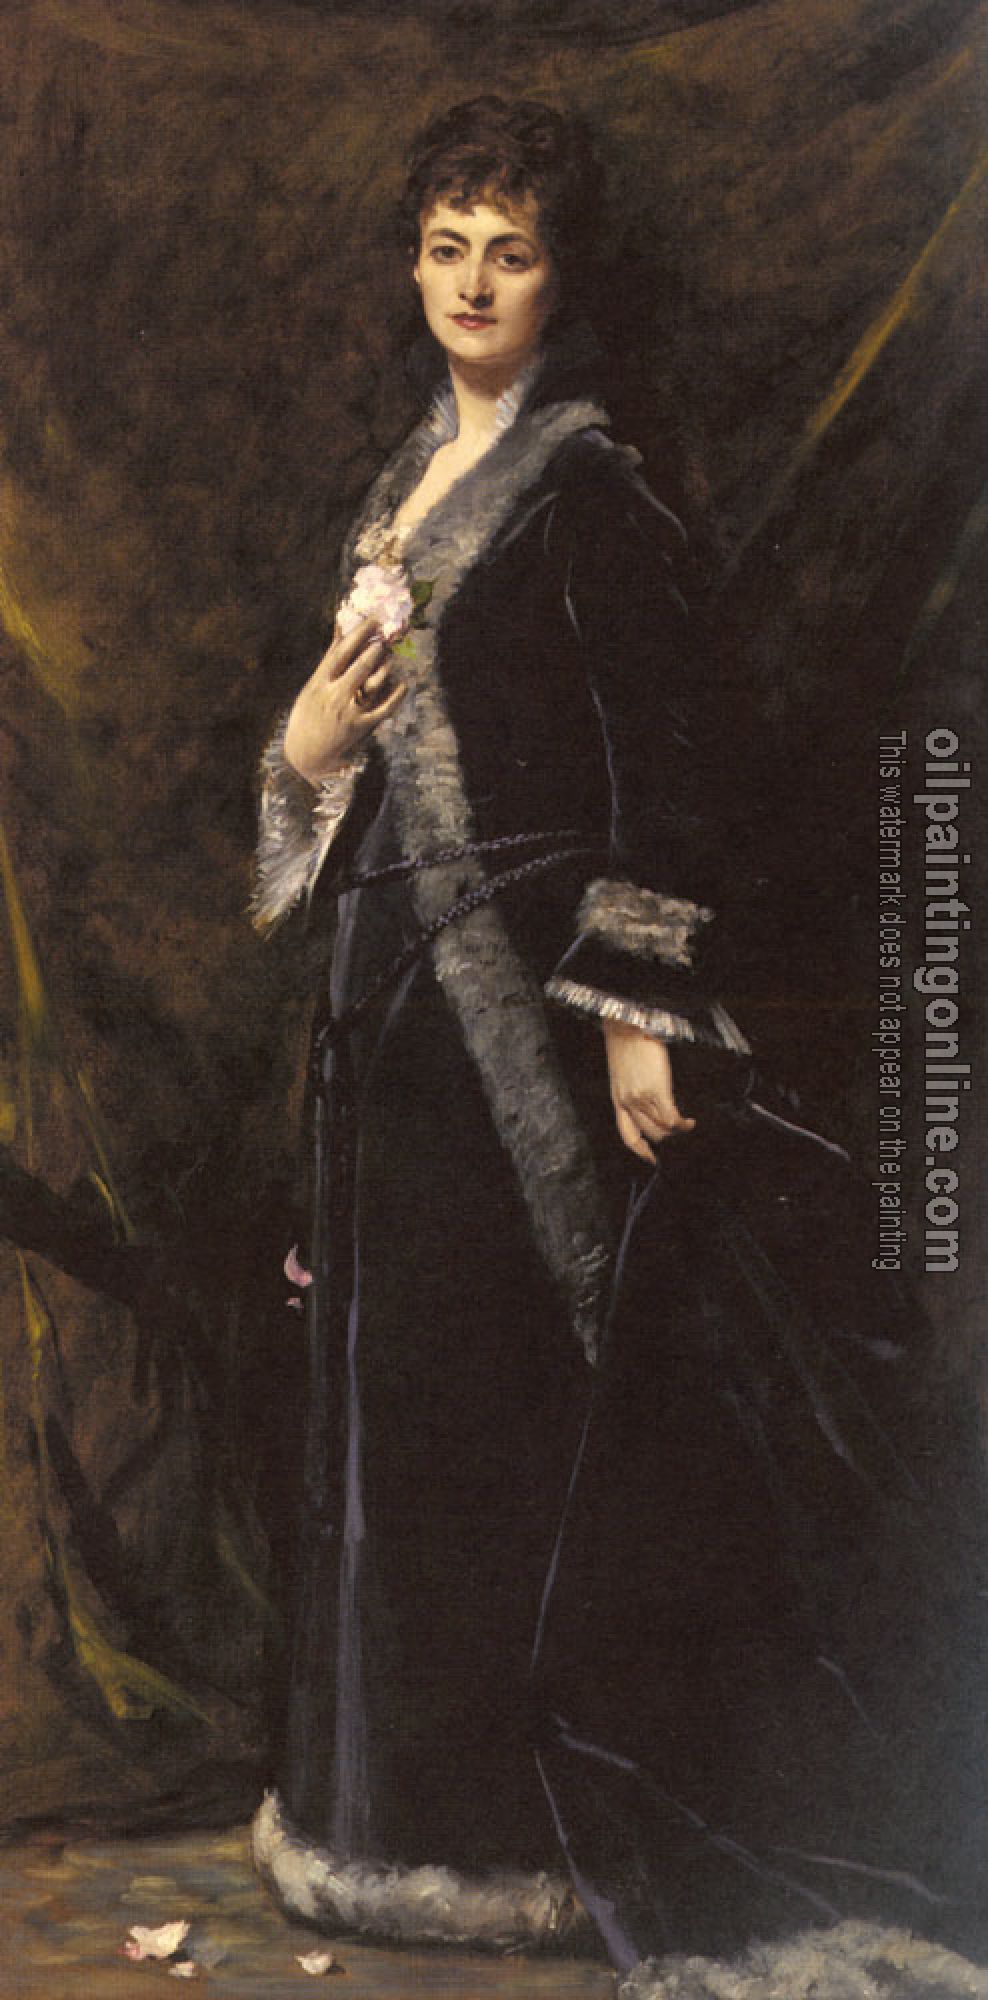 Carolus-Duran - A Portrait Of Helena Modjeska Chlapowski